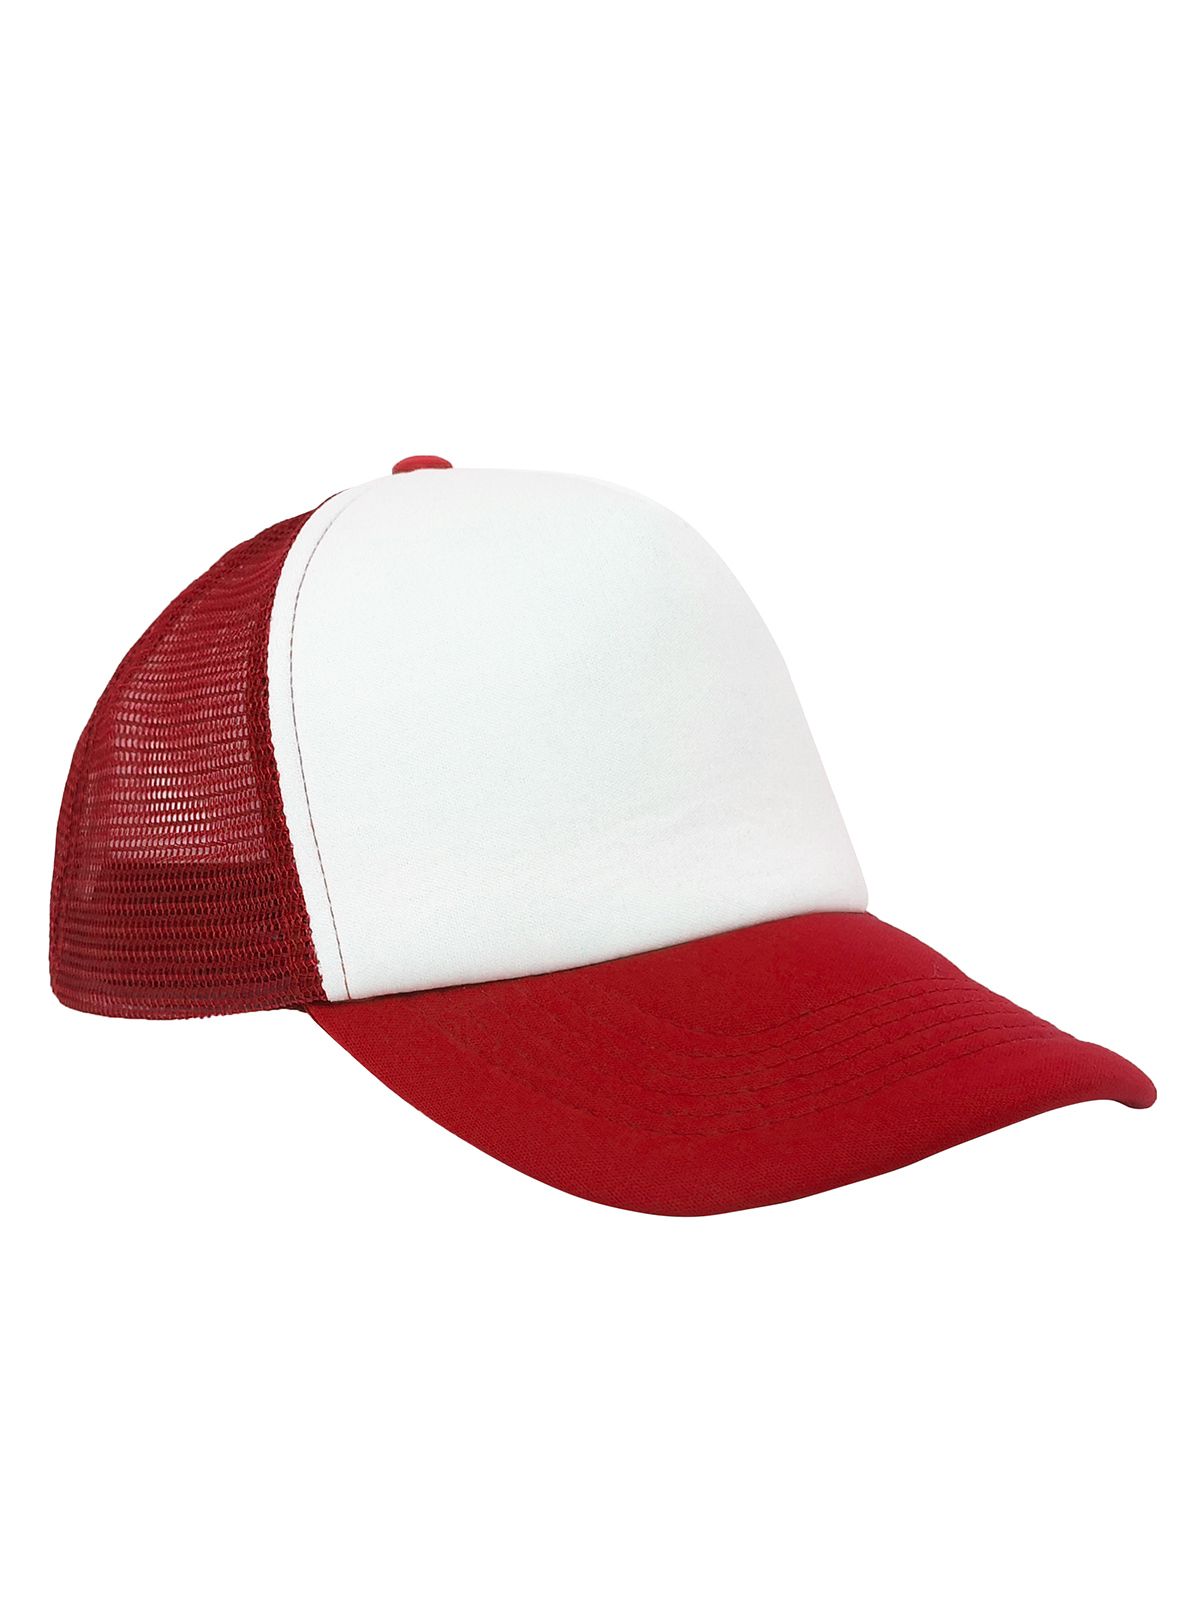 mesh-cap-red-white.webp